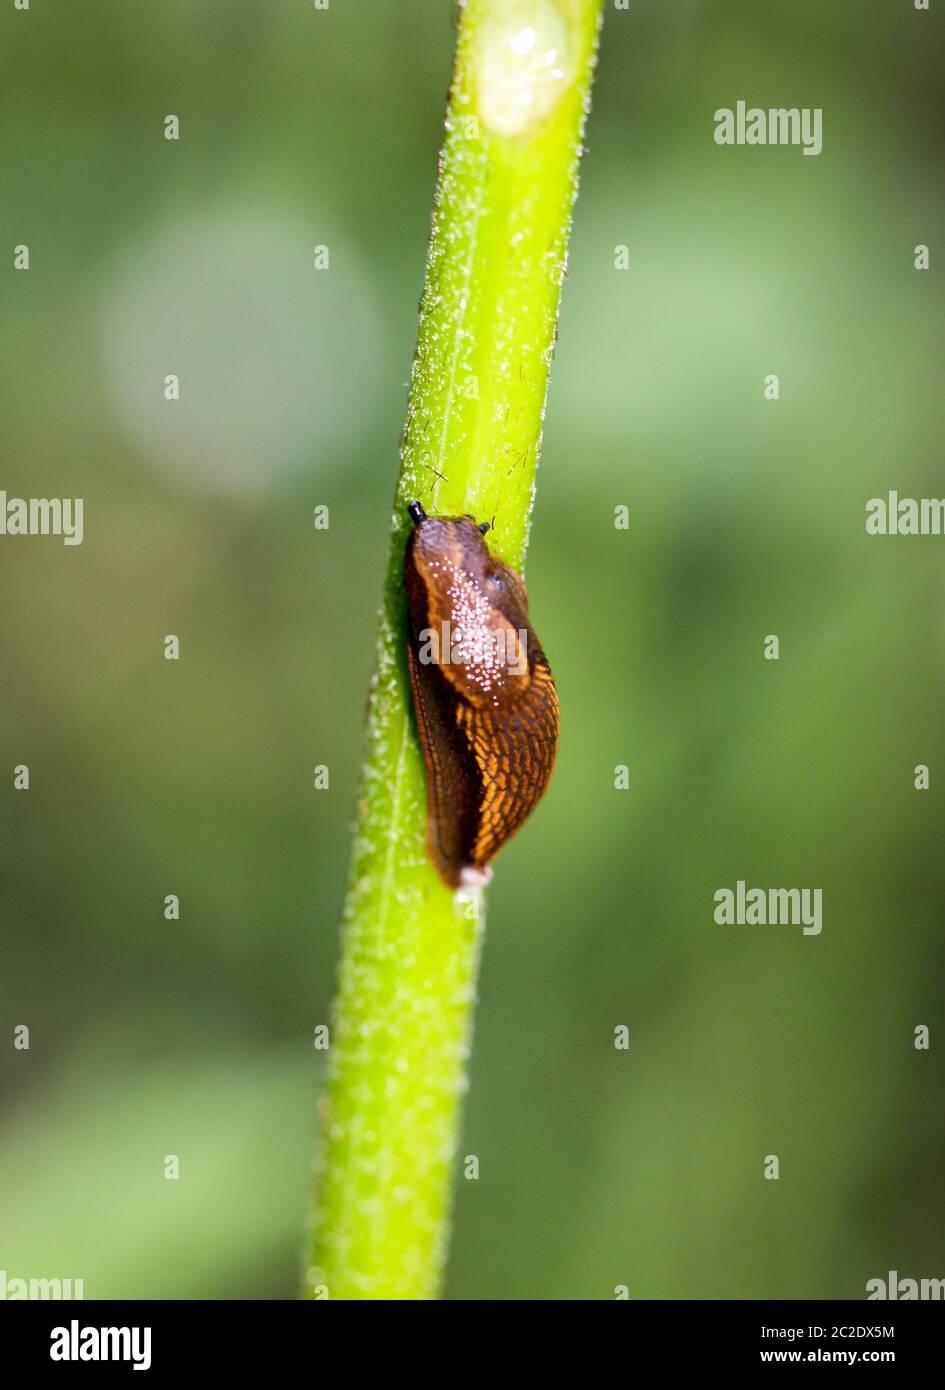 a slug creeps up a plant stem Stock Photo